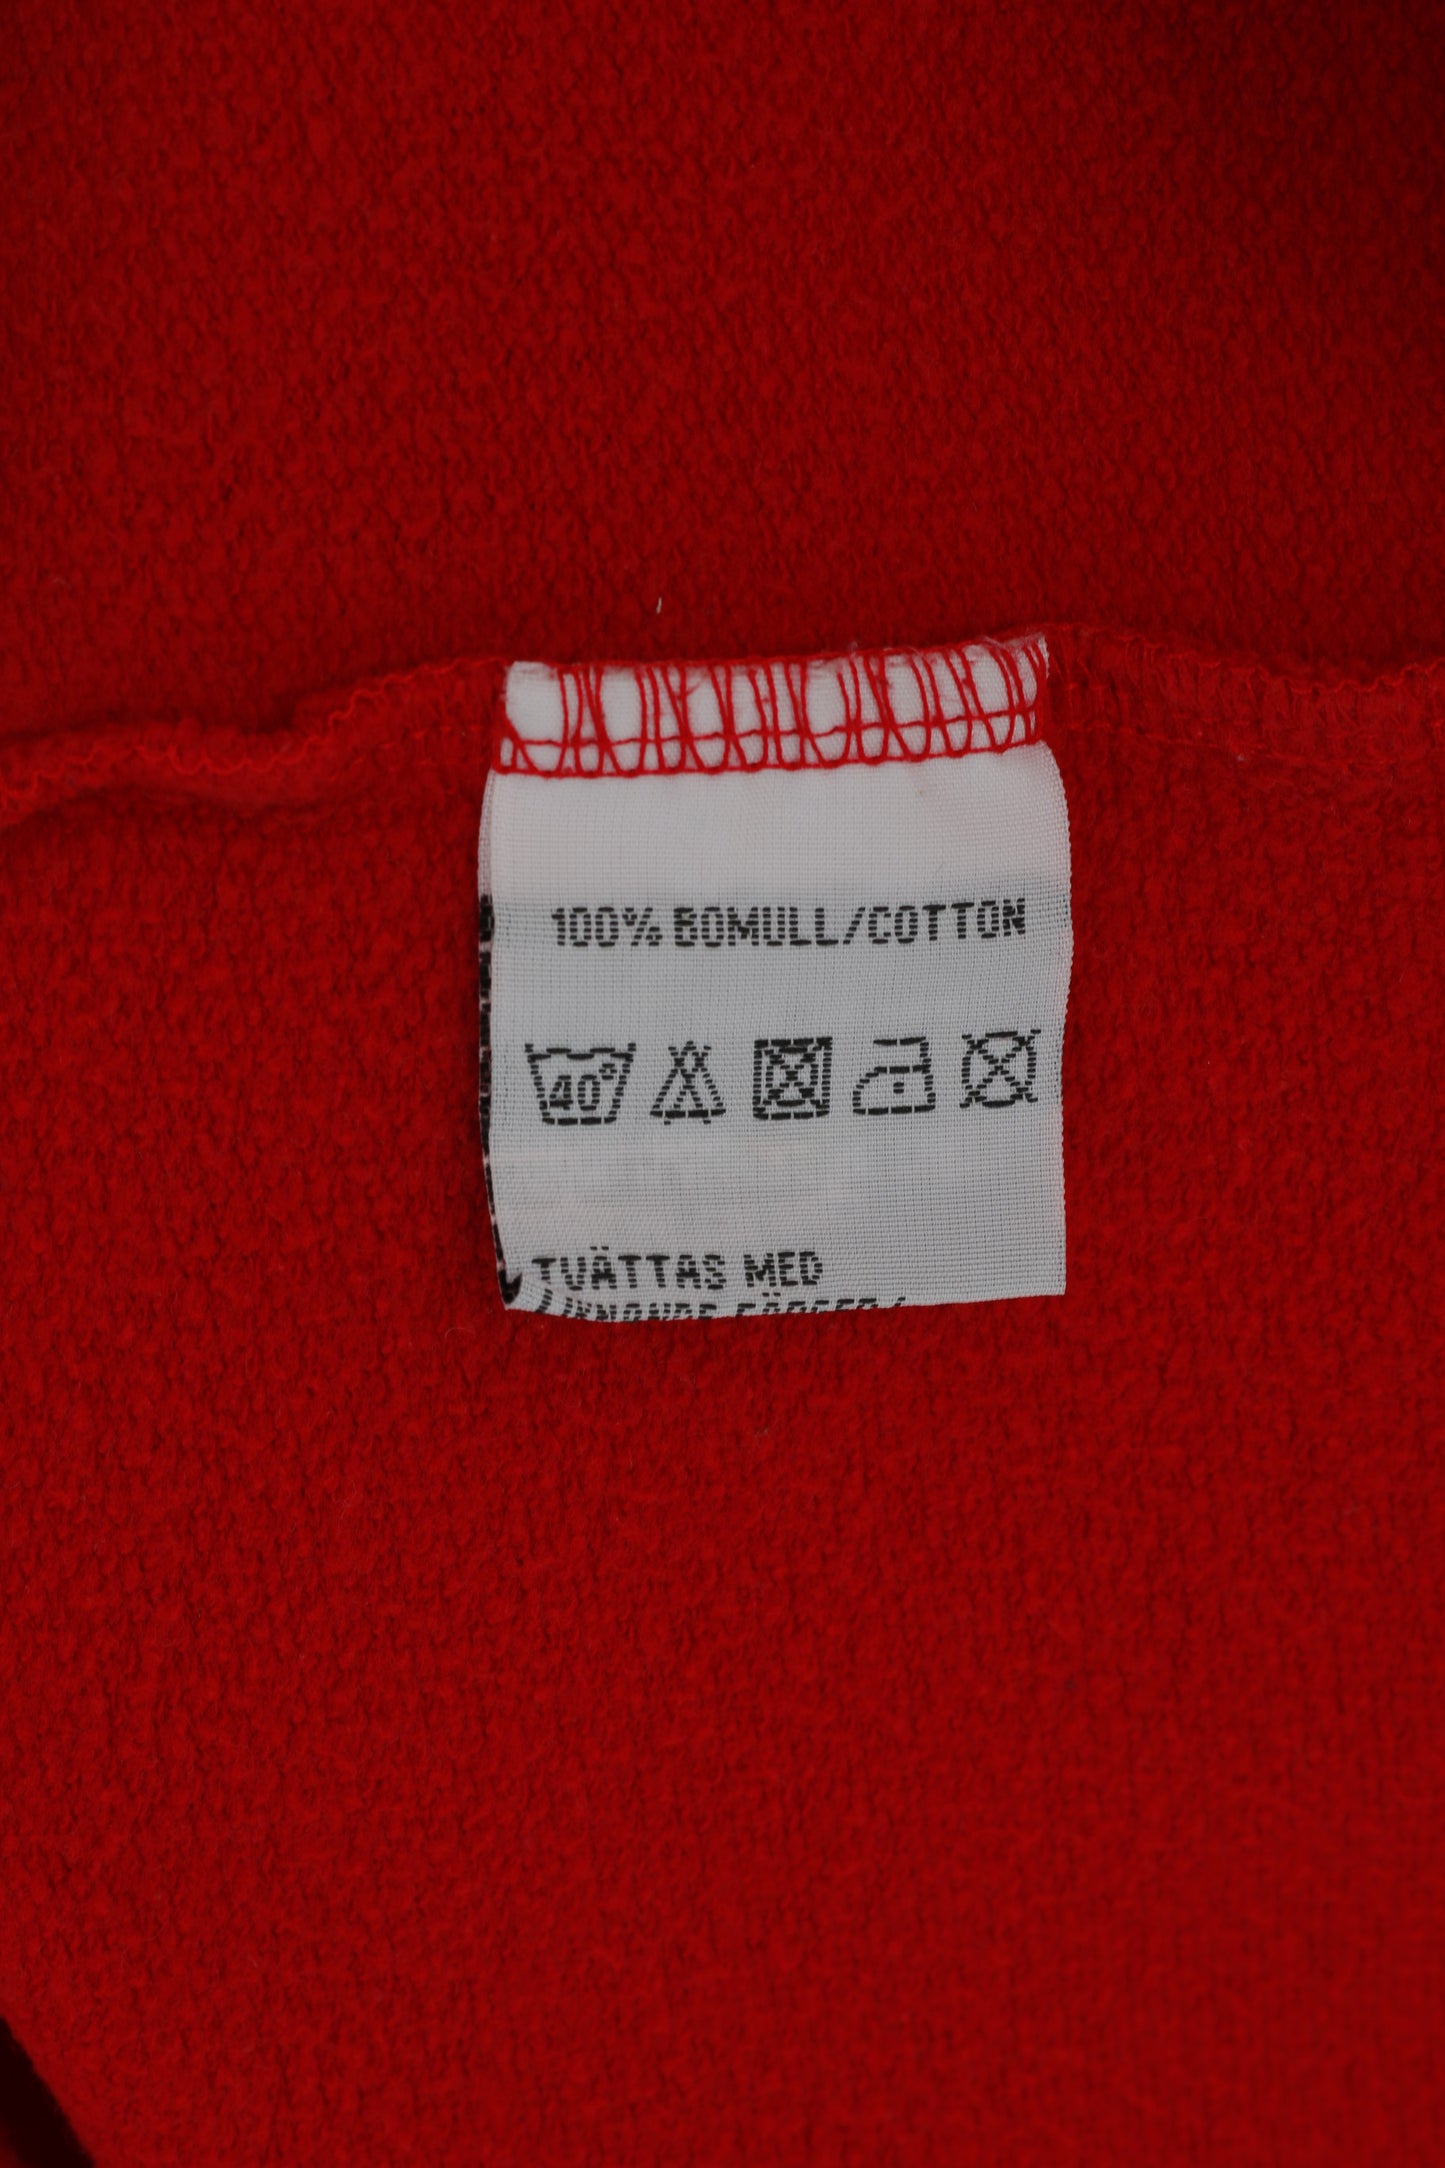 Etirel Women M Sweatshirt Red Cotton Heritage Campus Sportswear Hooded Top